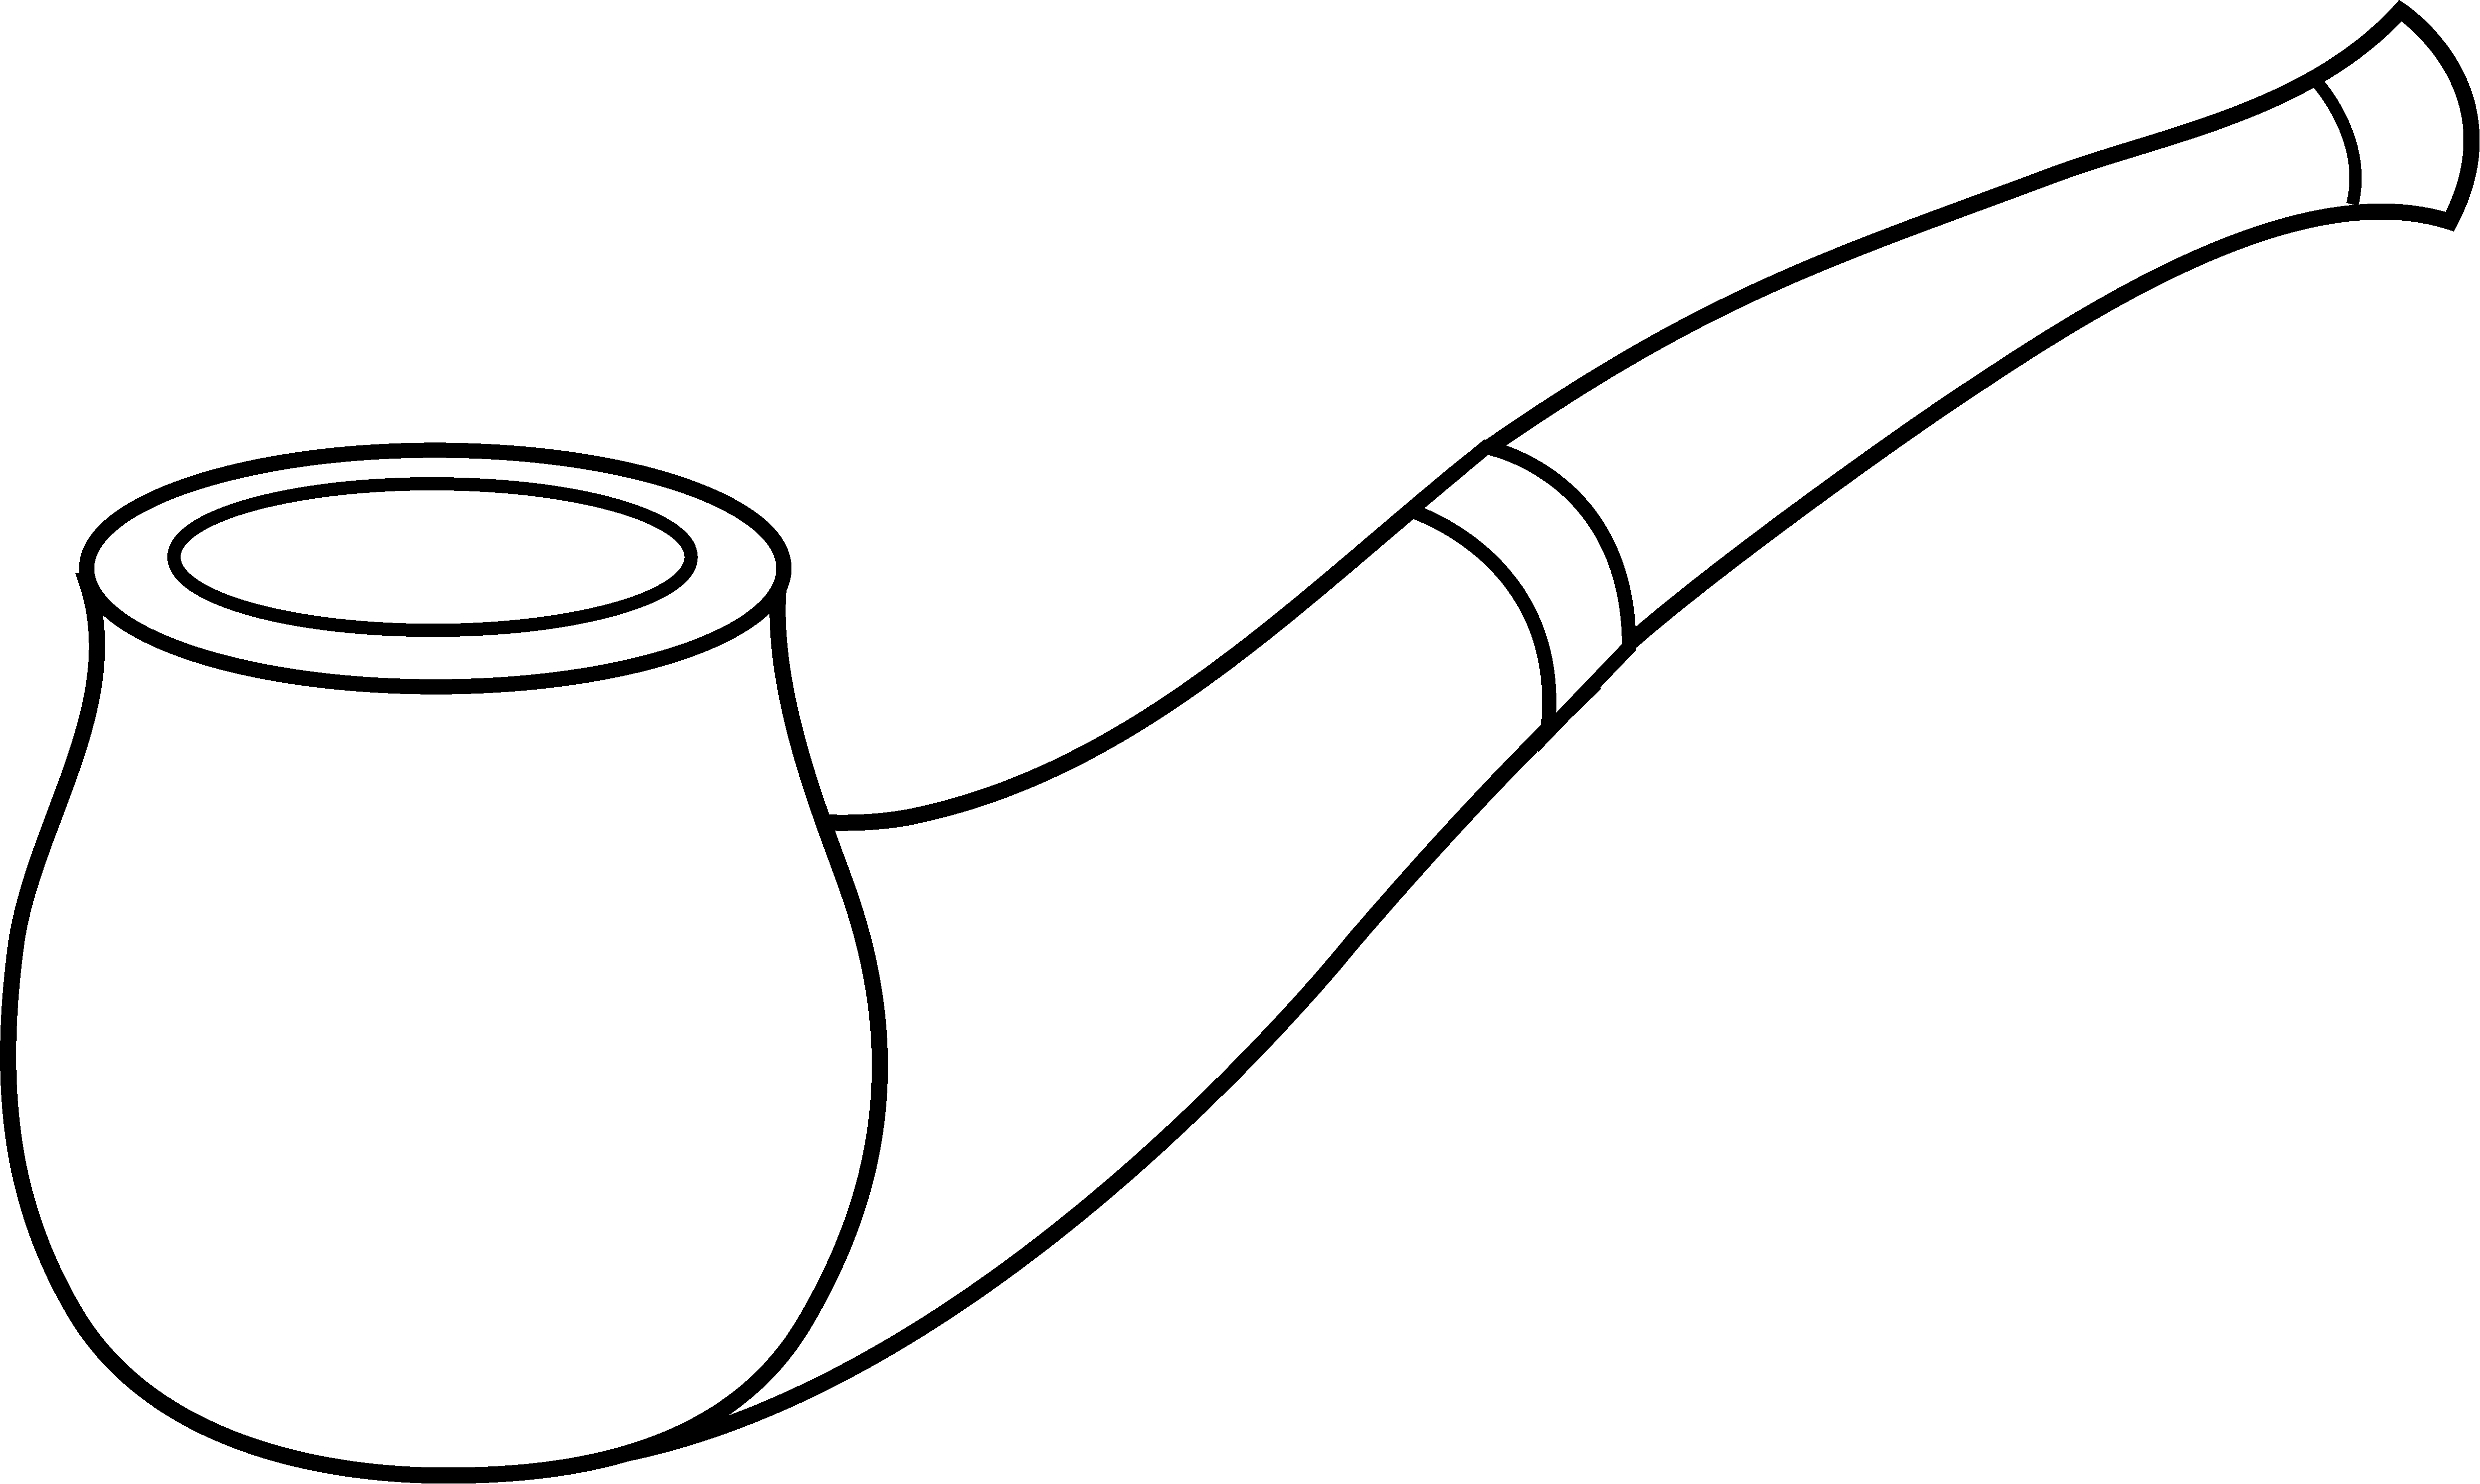 Noun Project - Black Tobacco 